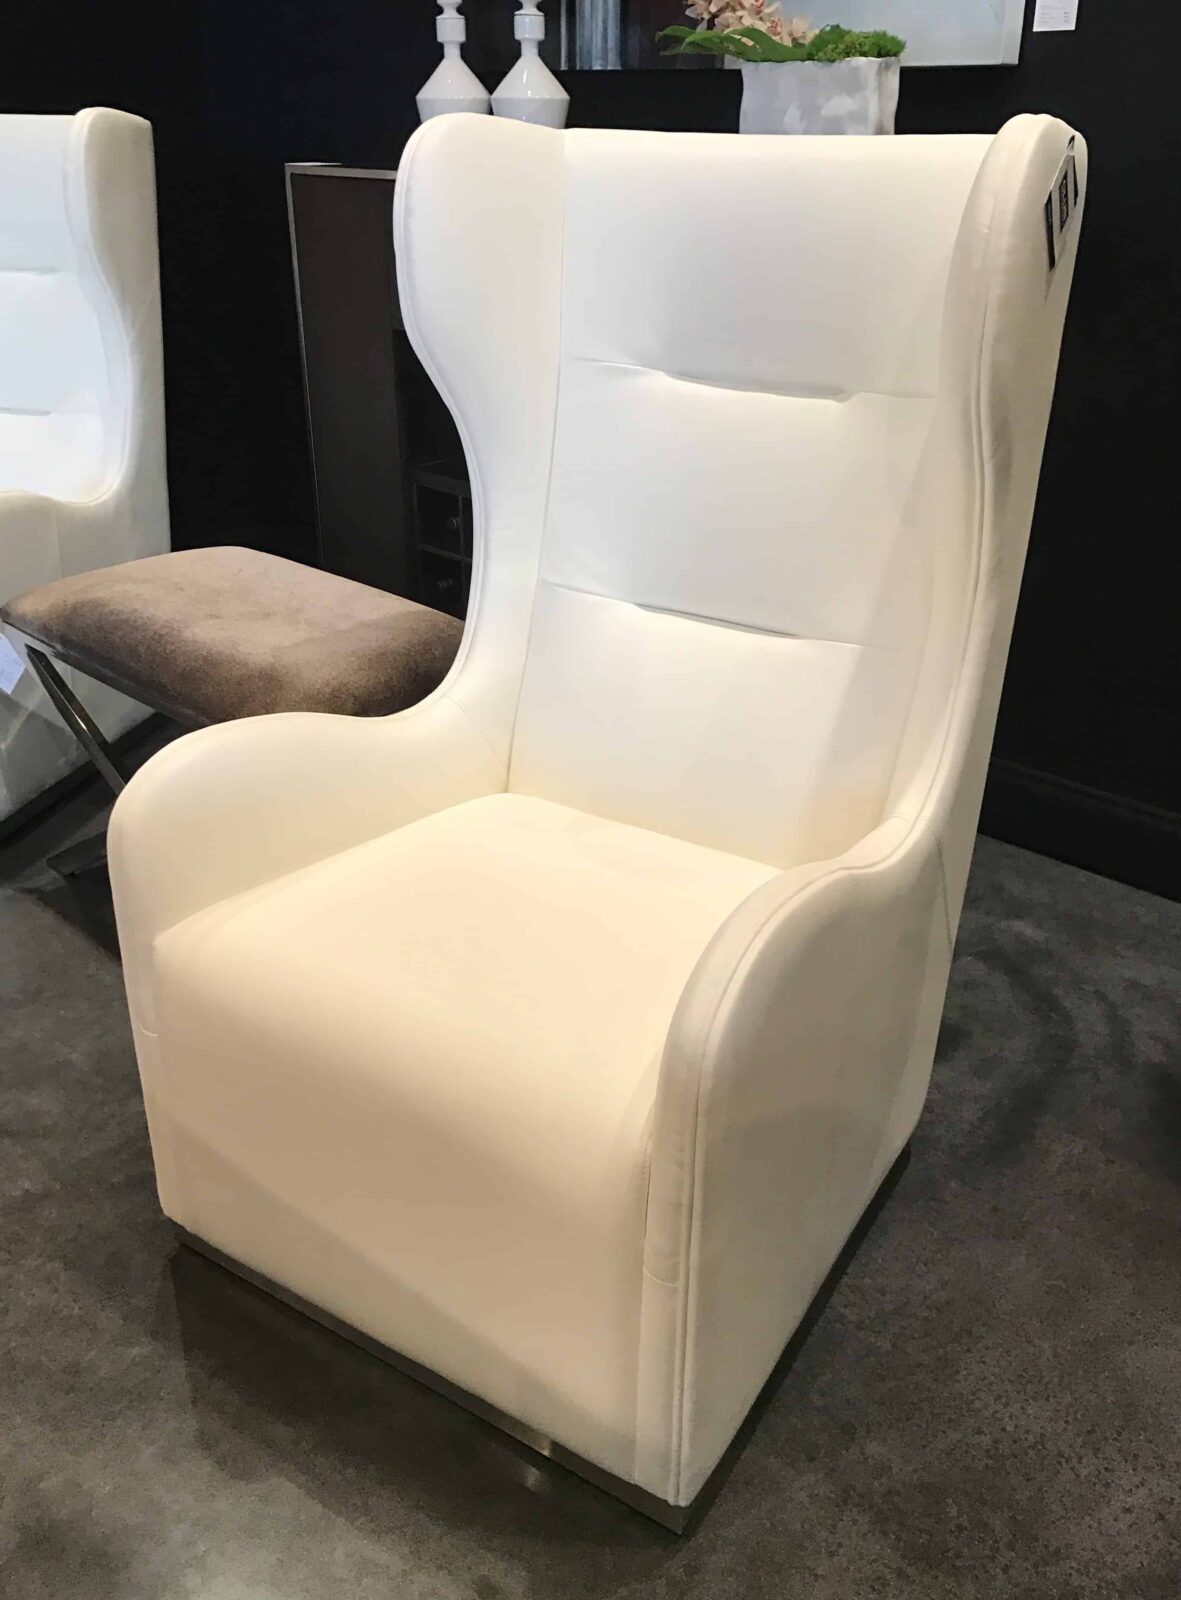 012 Sleek Contemporary Wingback Chair Lk Design Home Interior